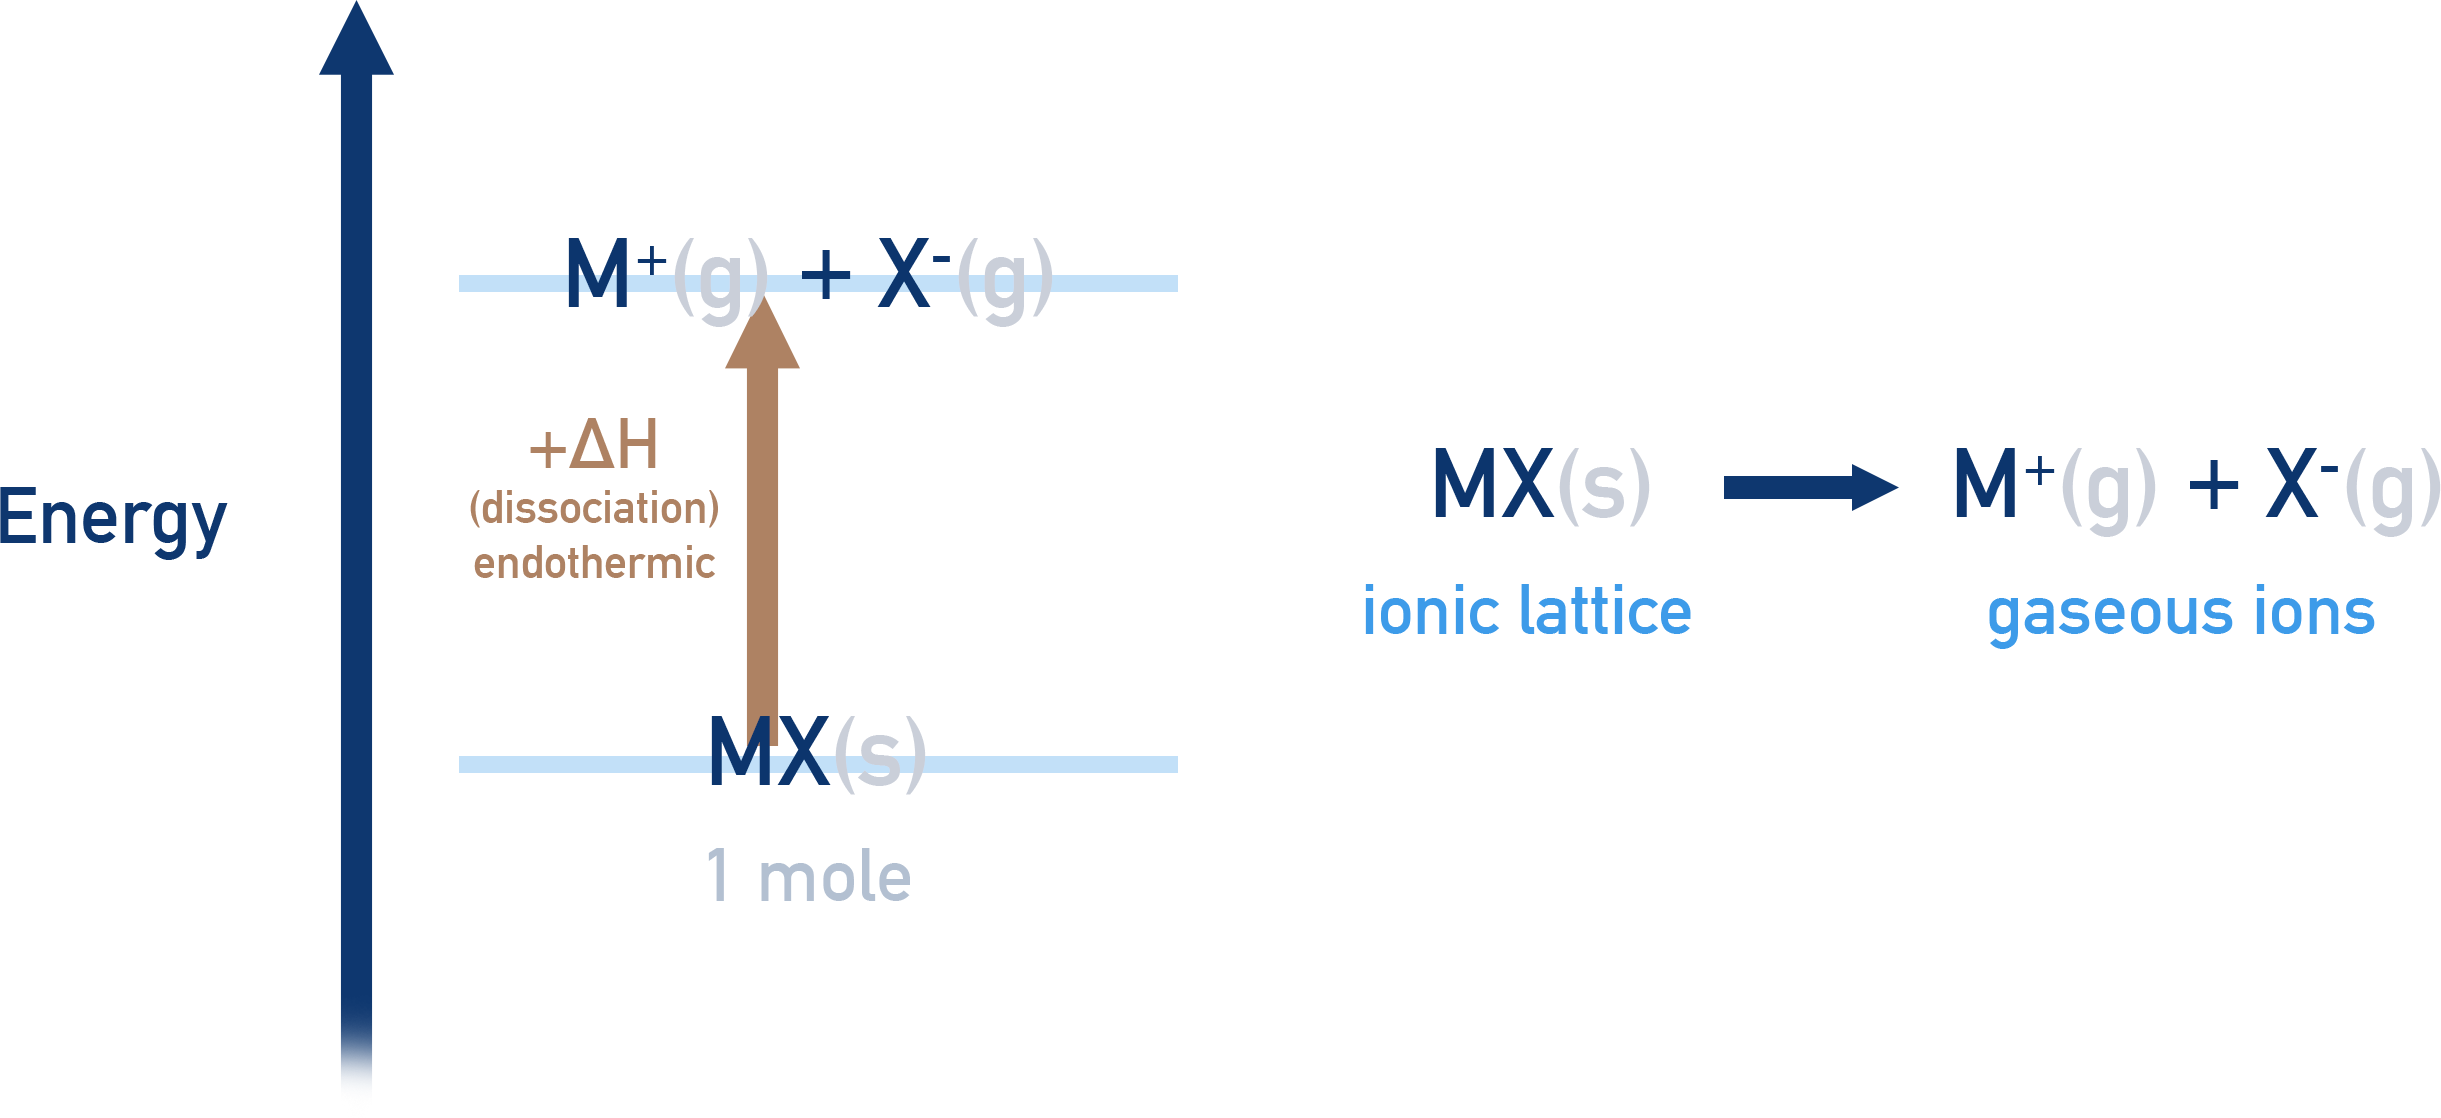 lattice enthalpy of dissociation a-level chemistry